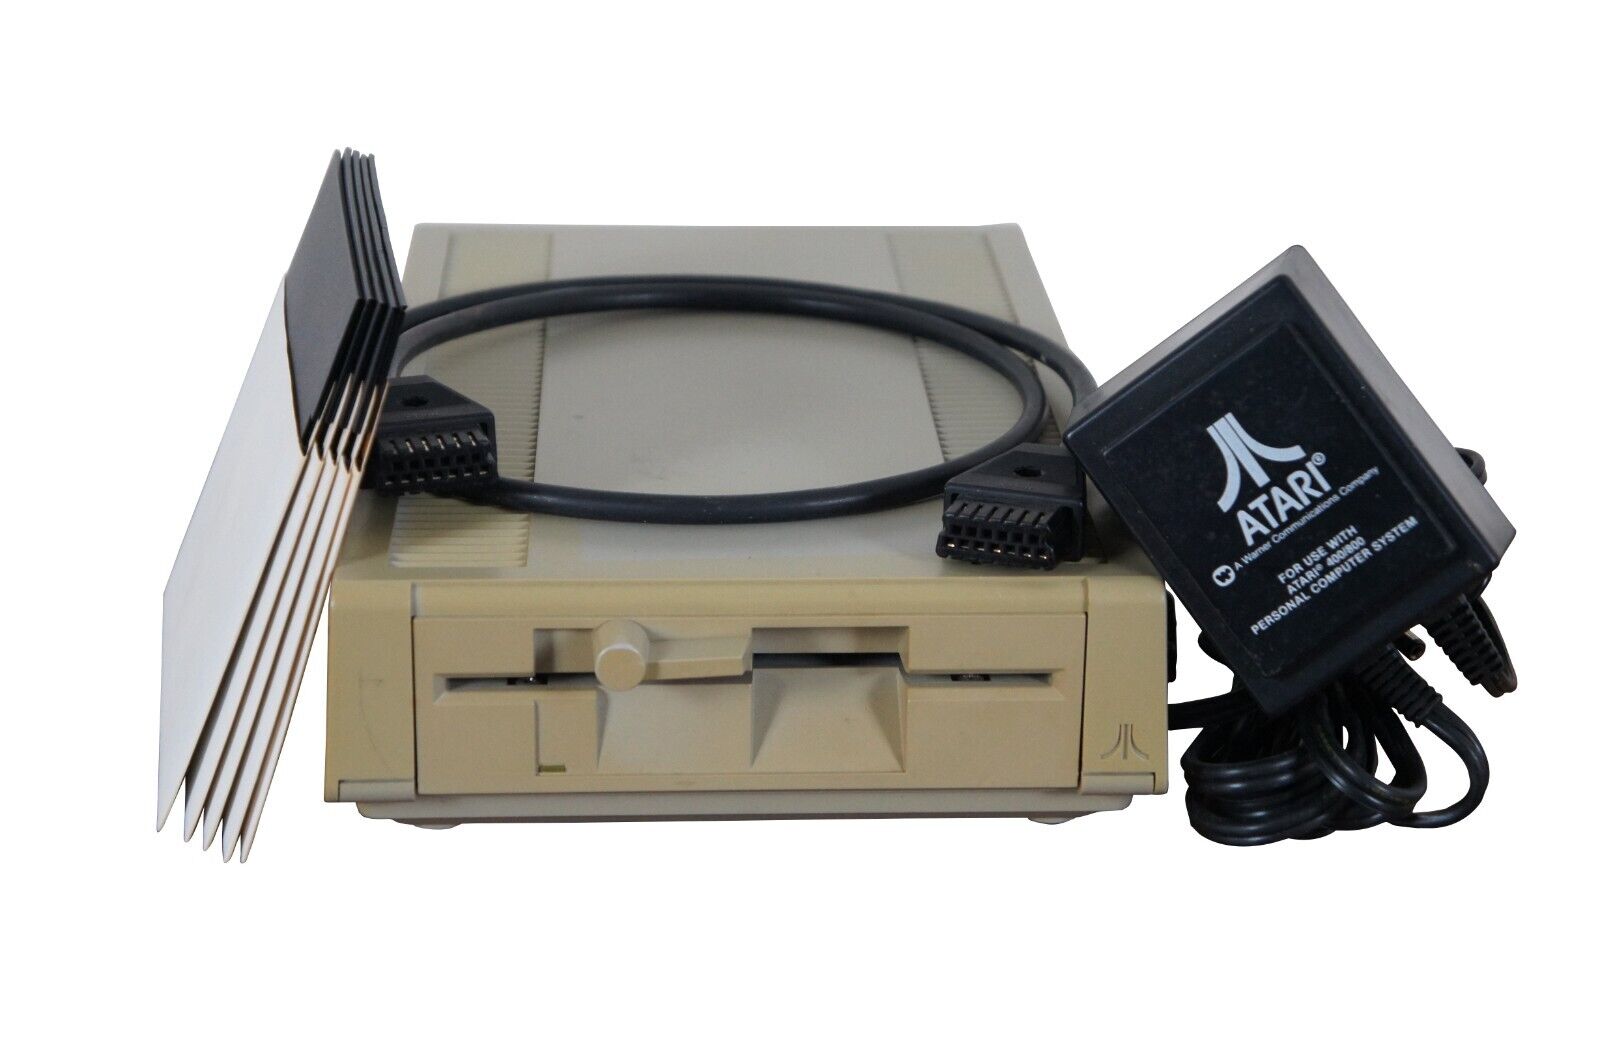 Vintage Atari XF551 Double Density Floppy Disk Drive w Power Supply 400 800